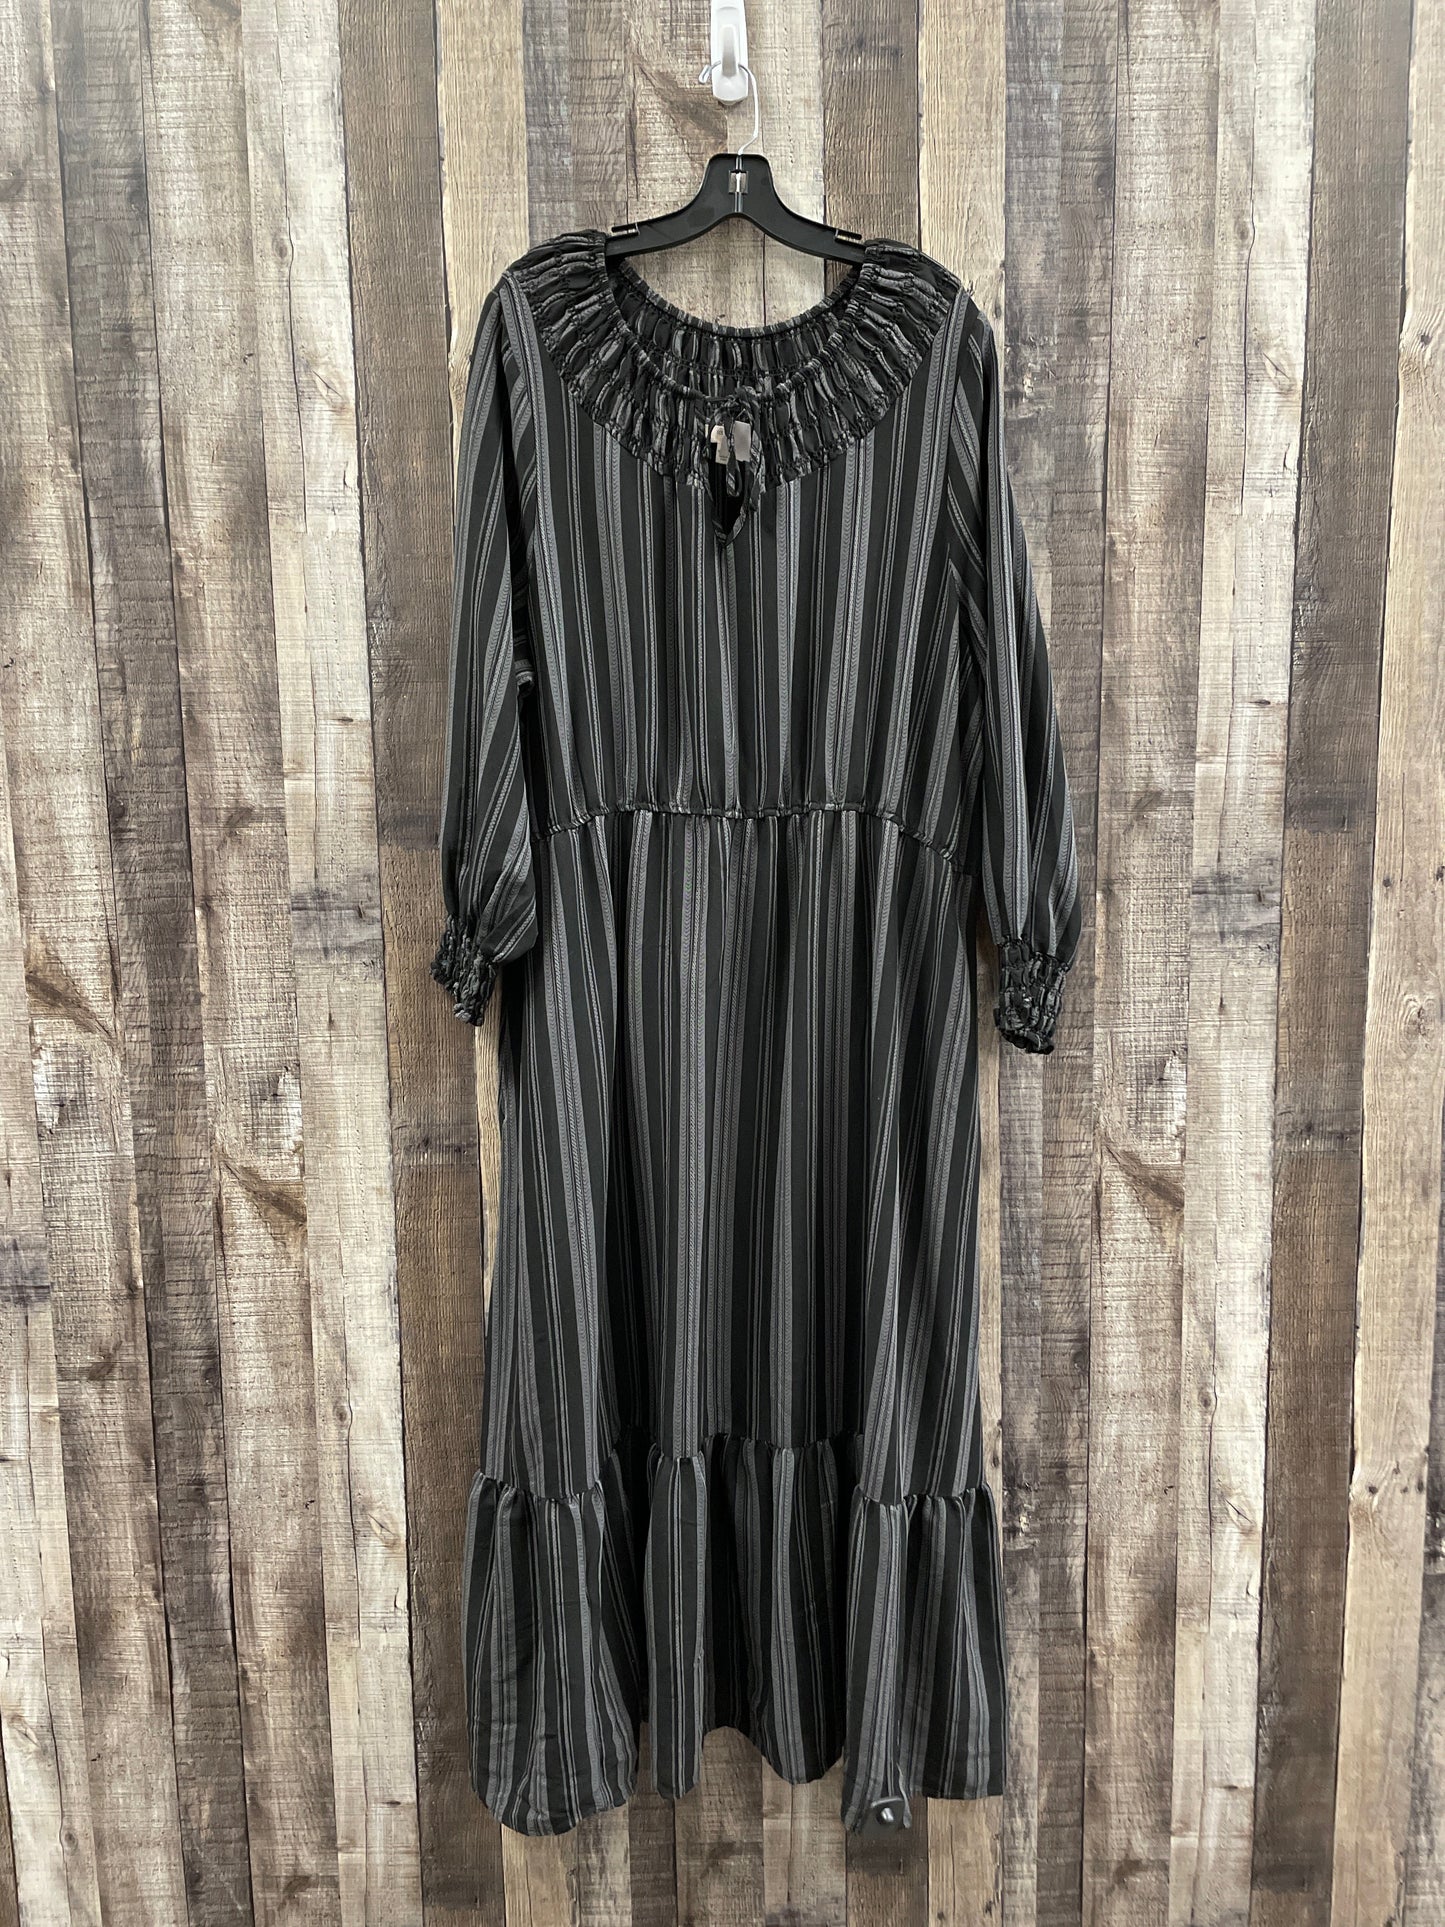 Black & Grey Dress Casual Maxi Terra & Sky, Size 2x